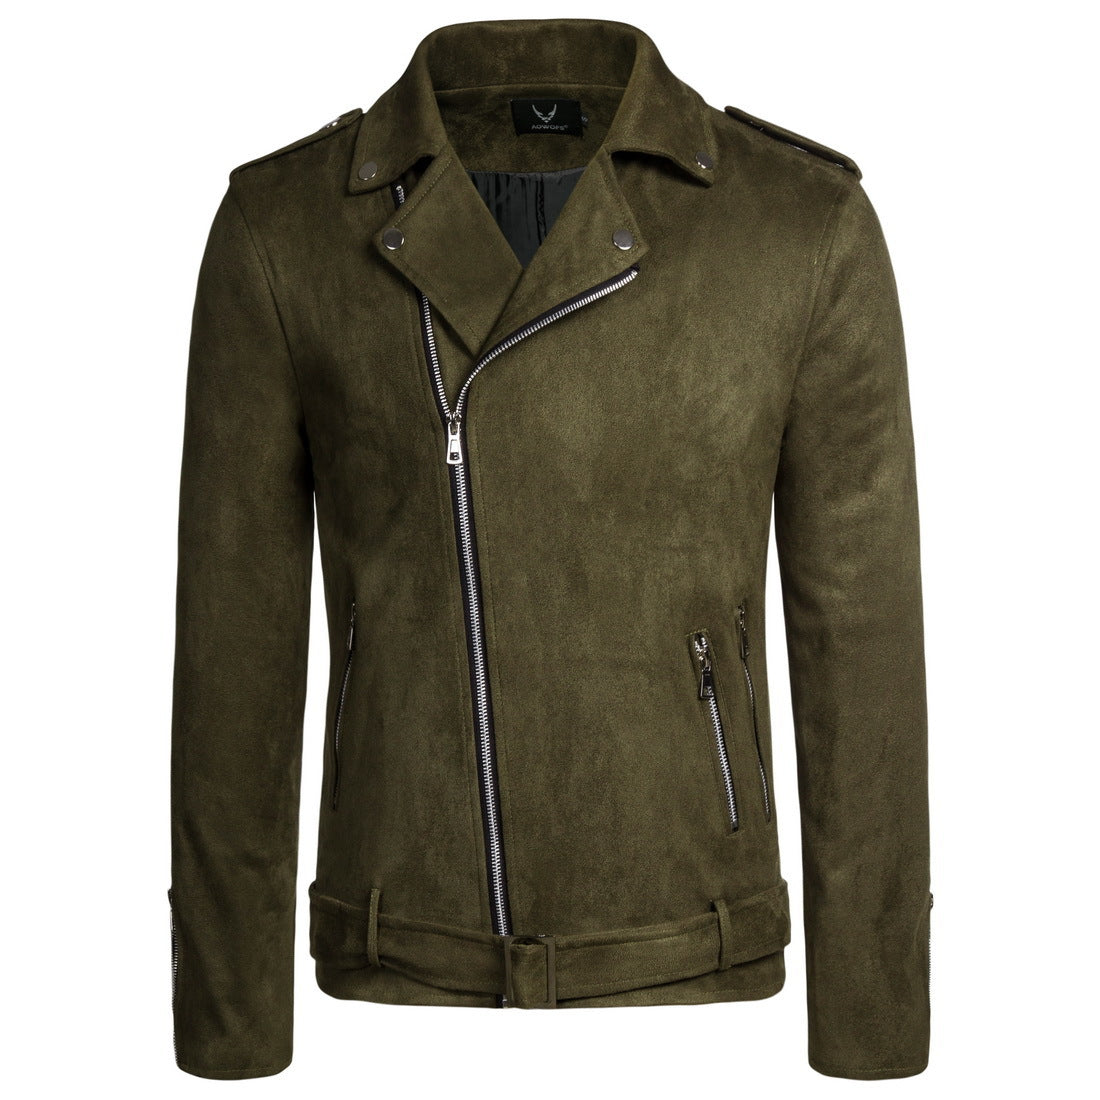 Fashion Plus Sizes Jackets & Coats for Men-Coats & Jackets-Army Green-M-Free Shipping Leatheretro